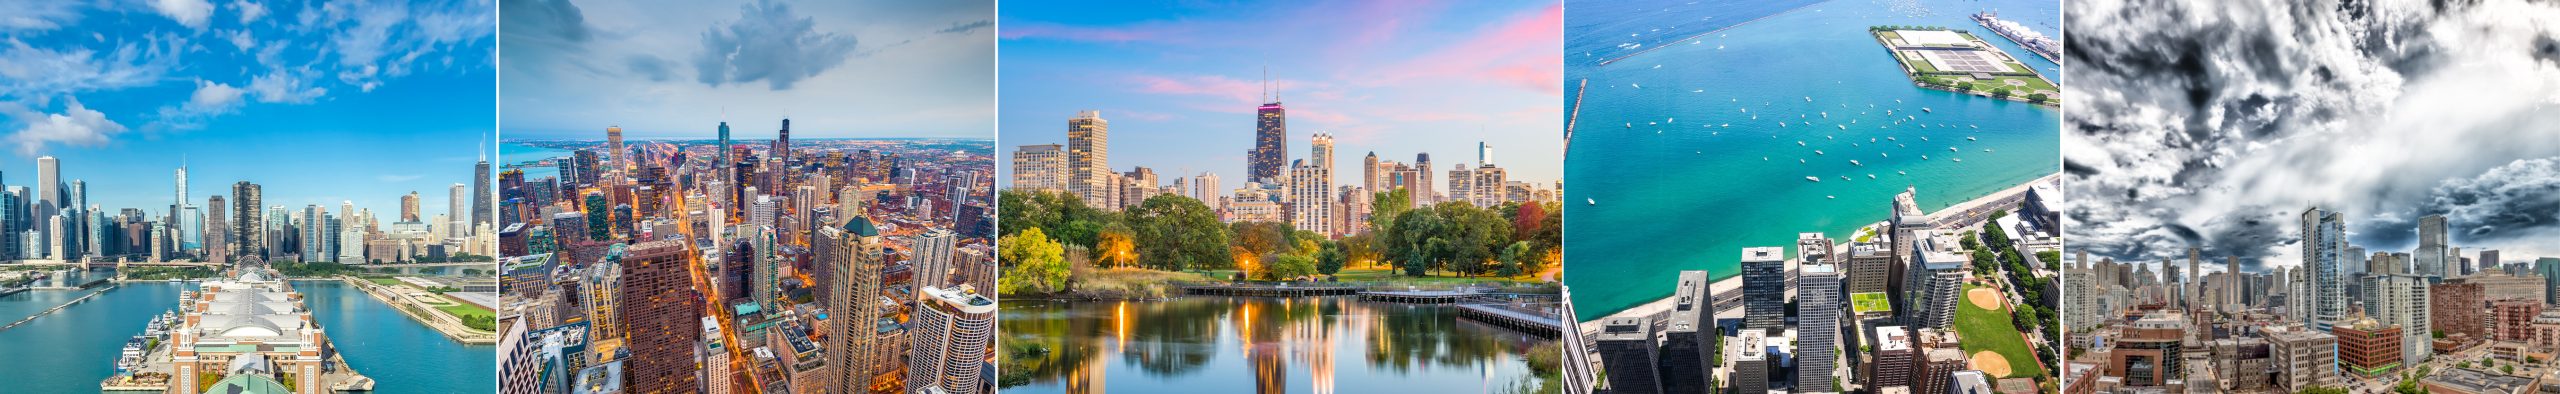 Search MLS listings in popular residential buildings in Chicago